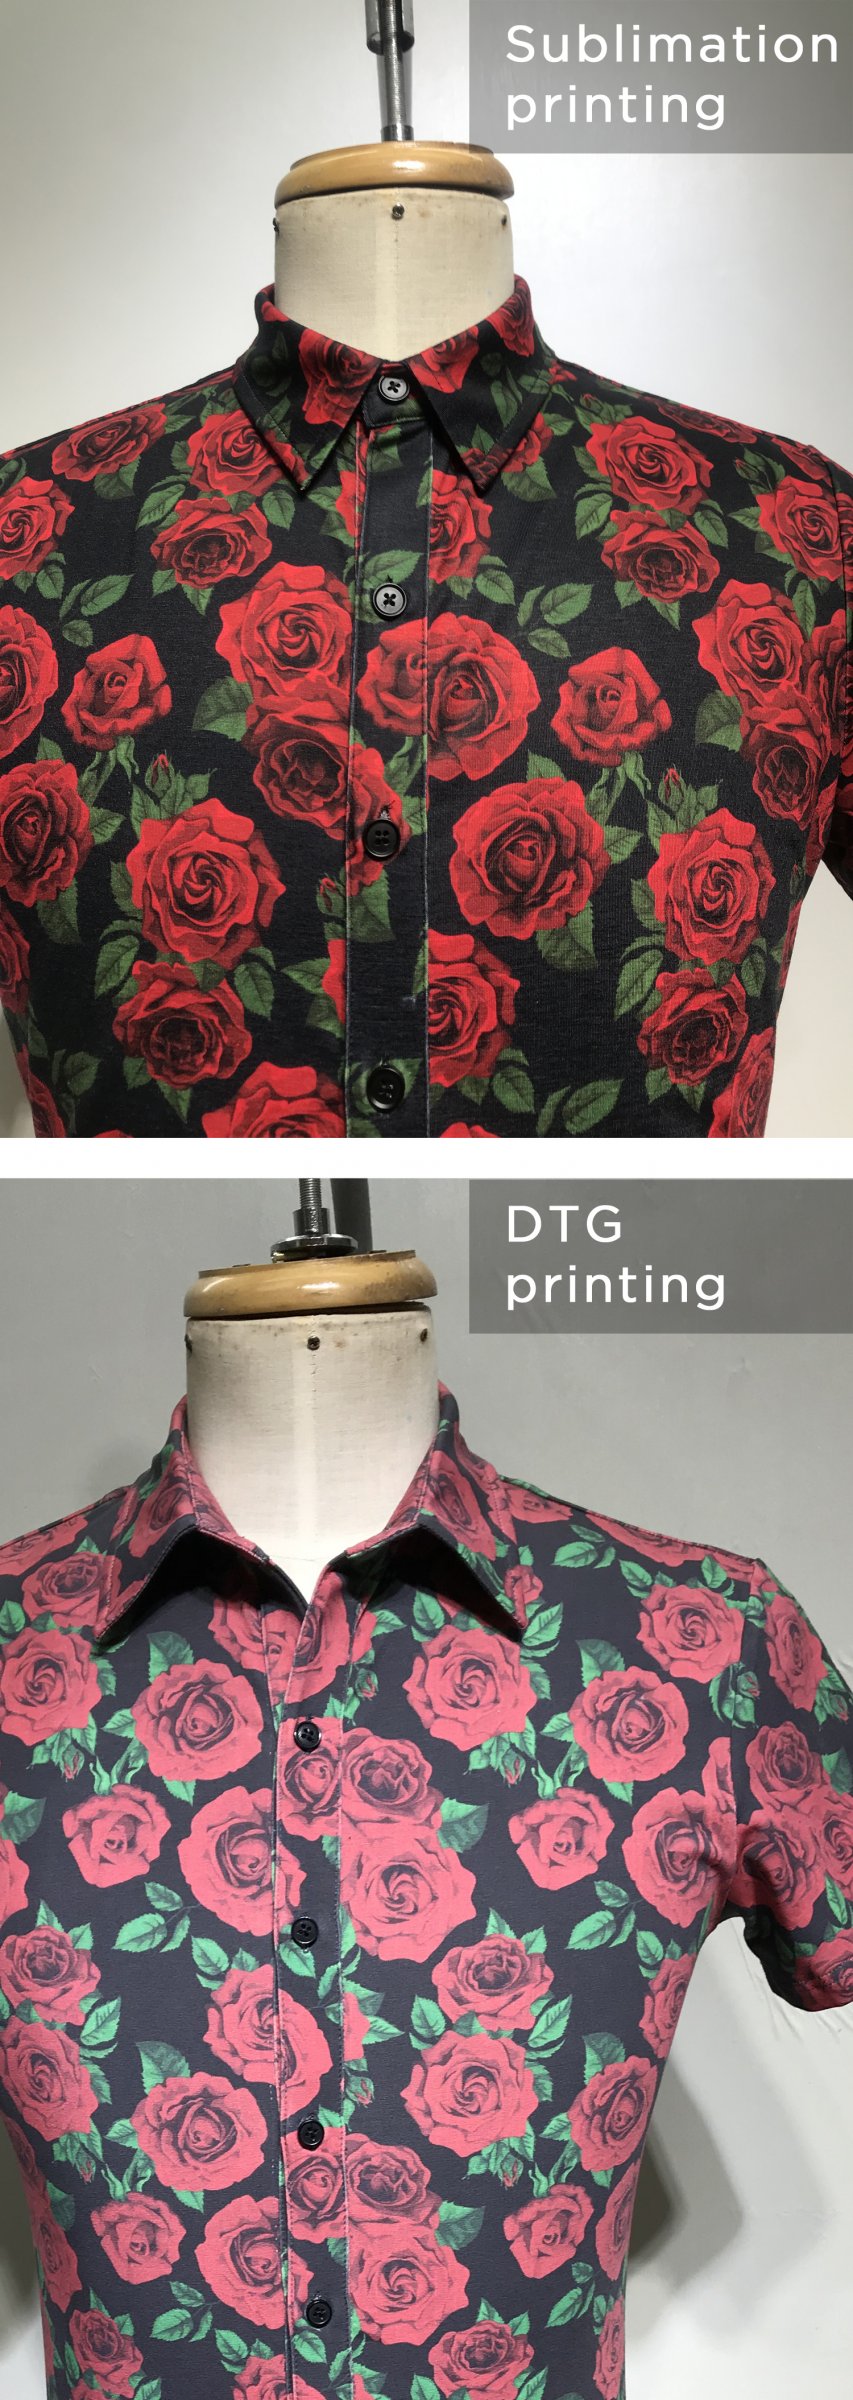 Sublimation printing VS DTG printing